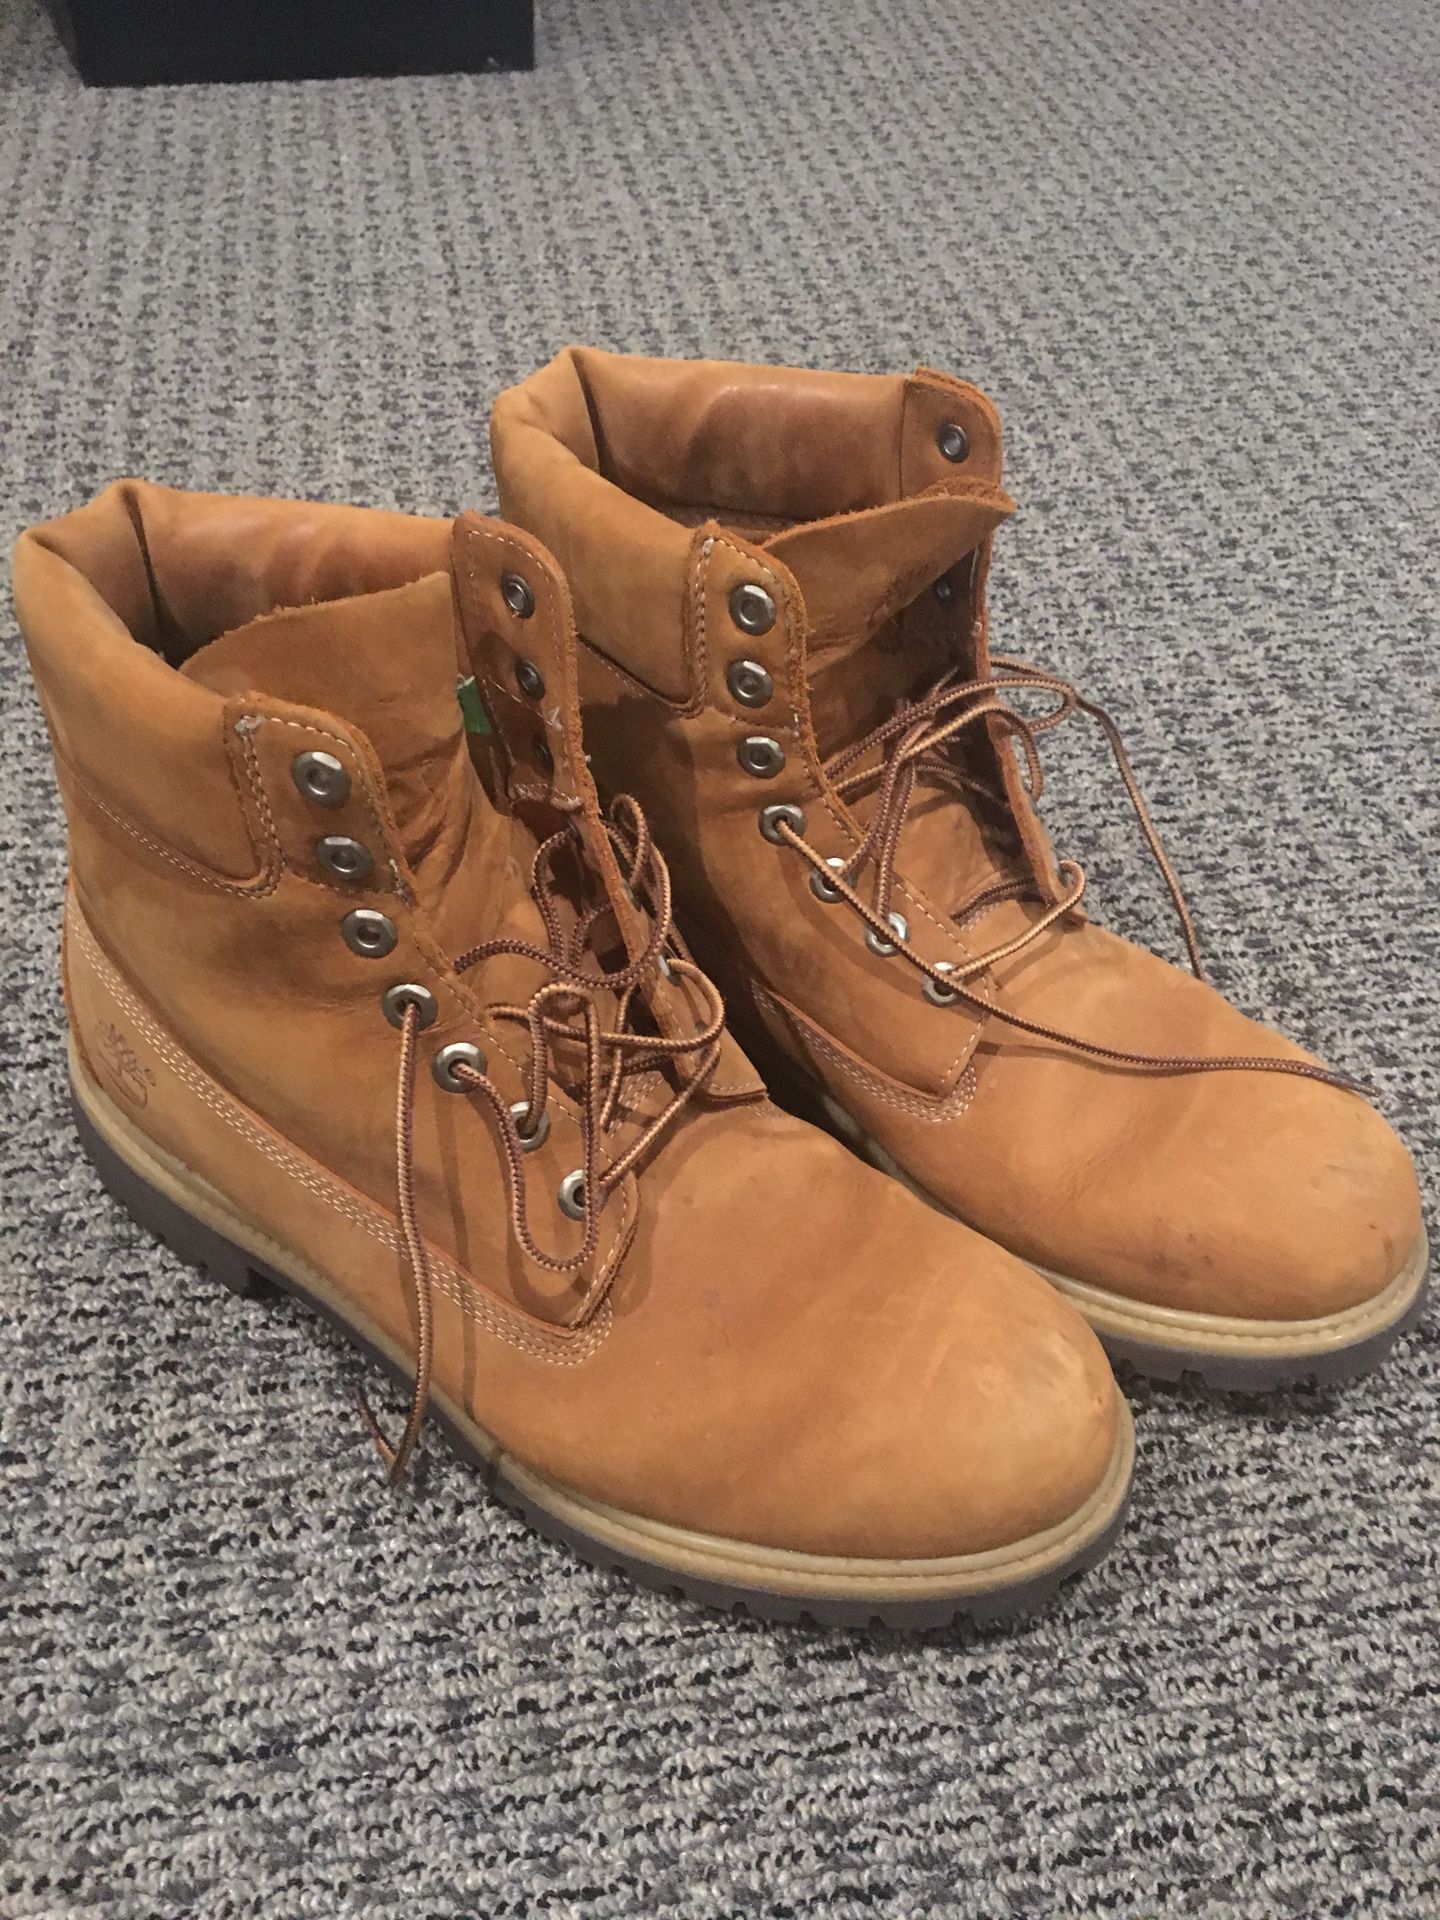 Timberland Boots (size 12)